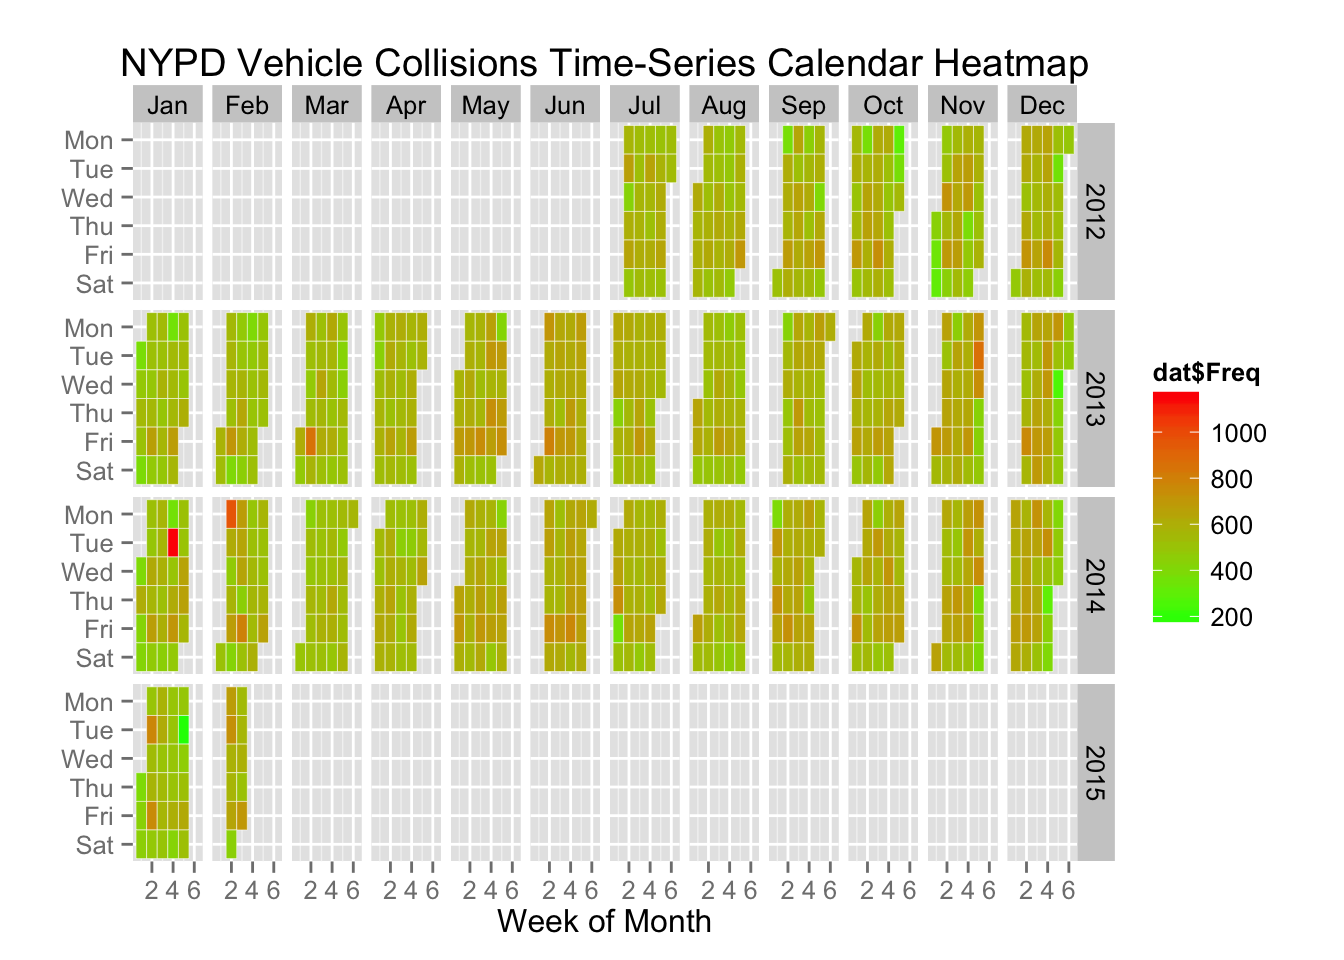 NYPD Motor Vehicle Collisions Calendar Heatmap